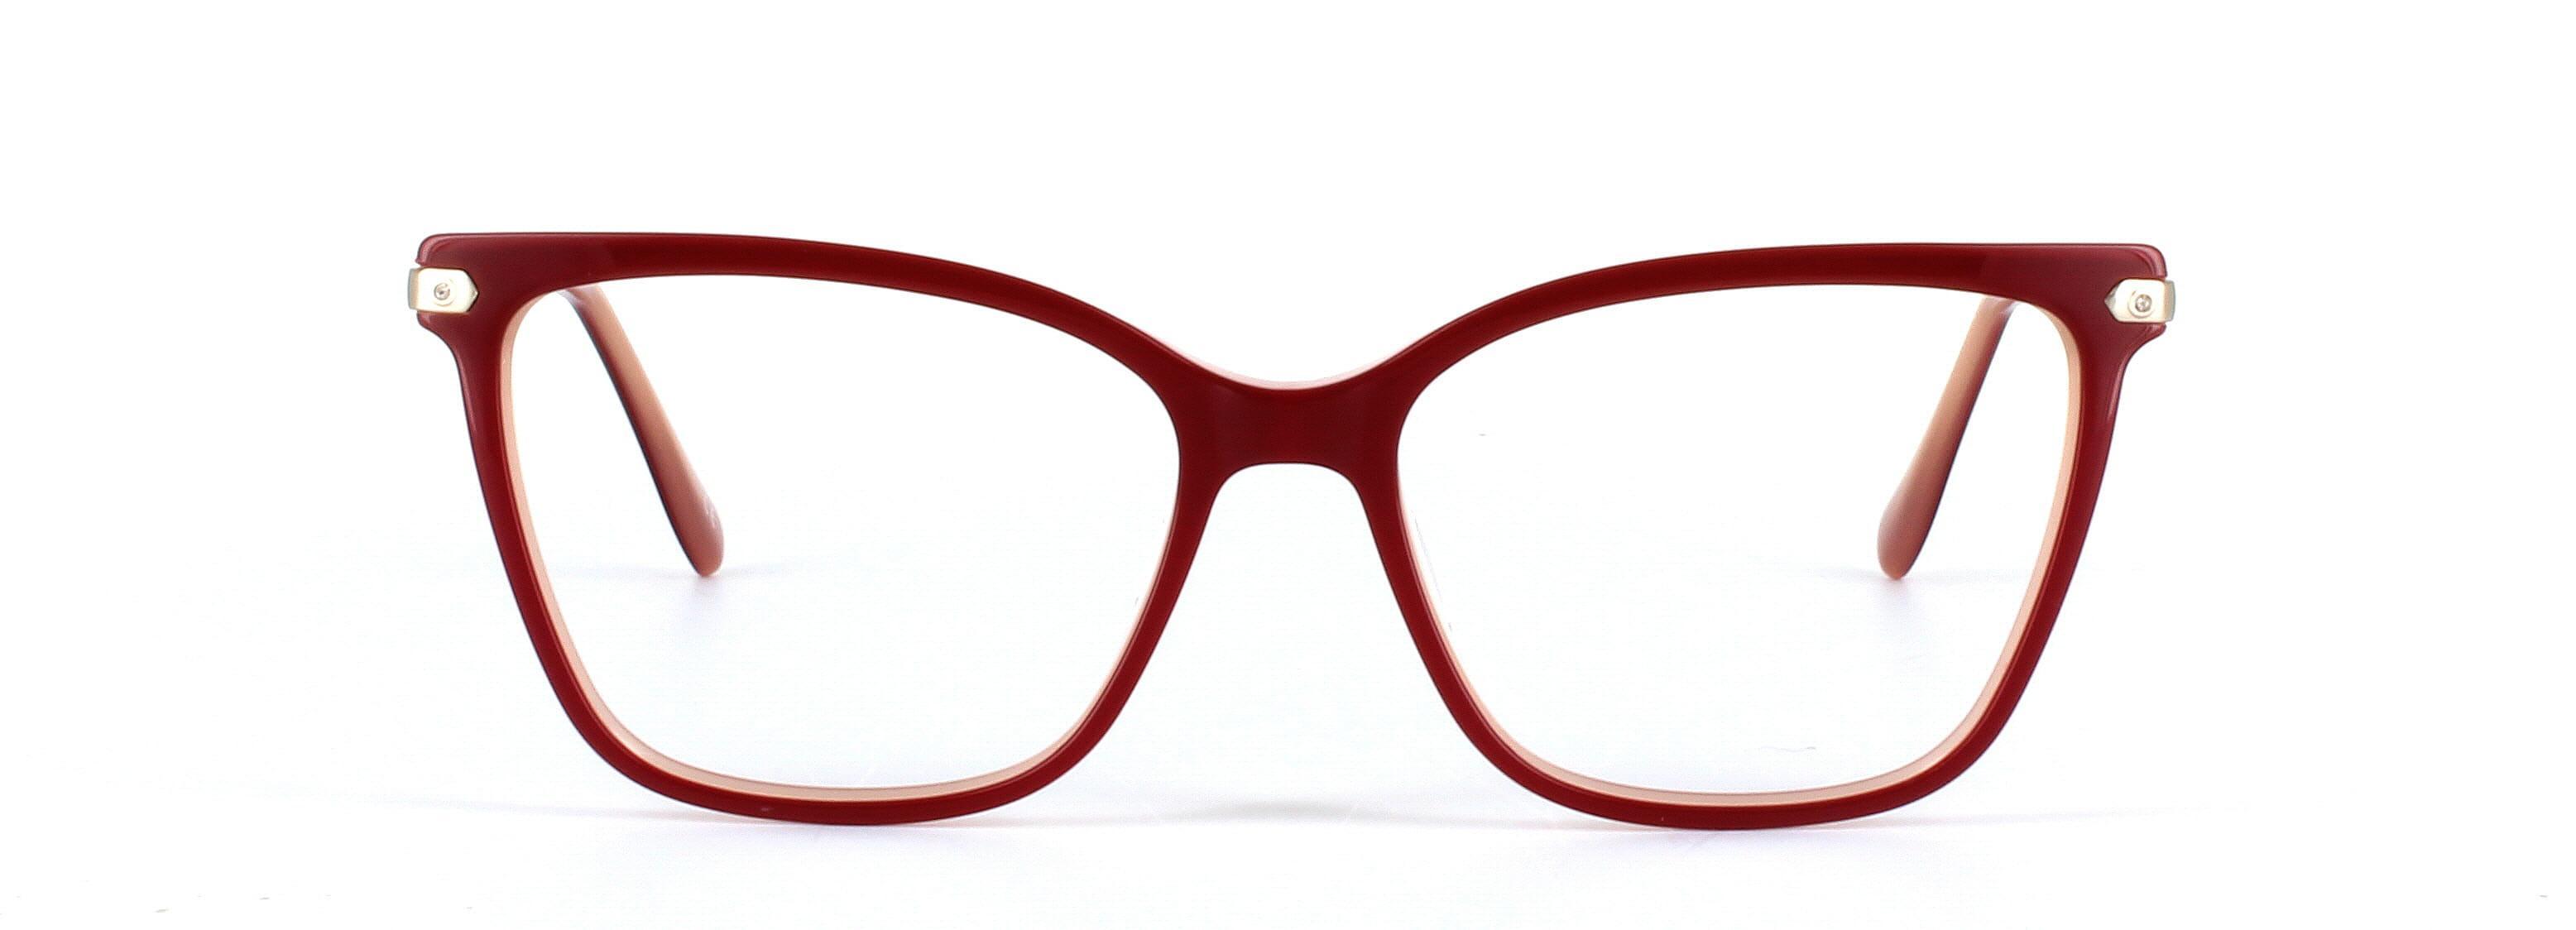 Harleigh Red Full Rim Square Acetate Glasses - Image View 5